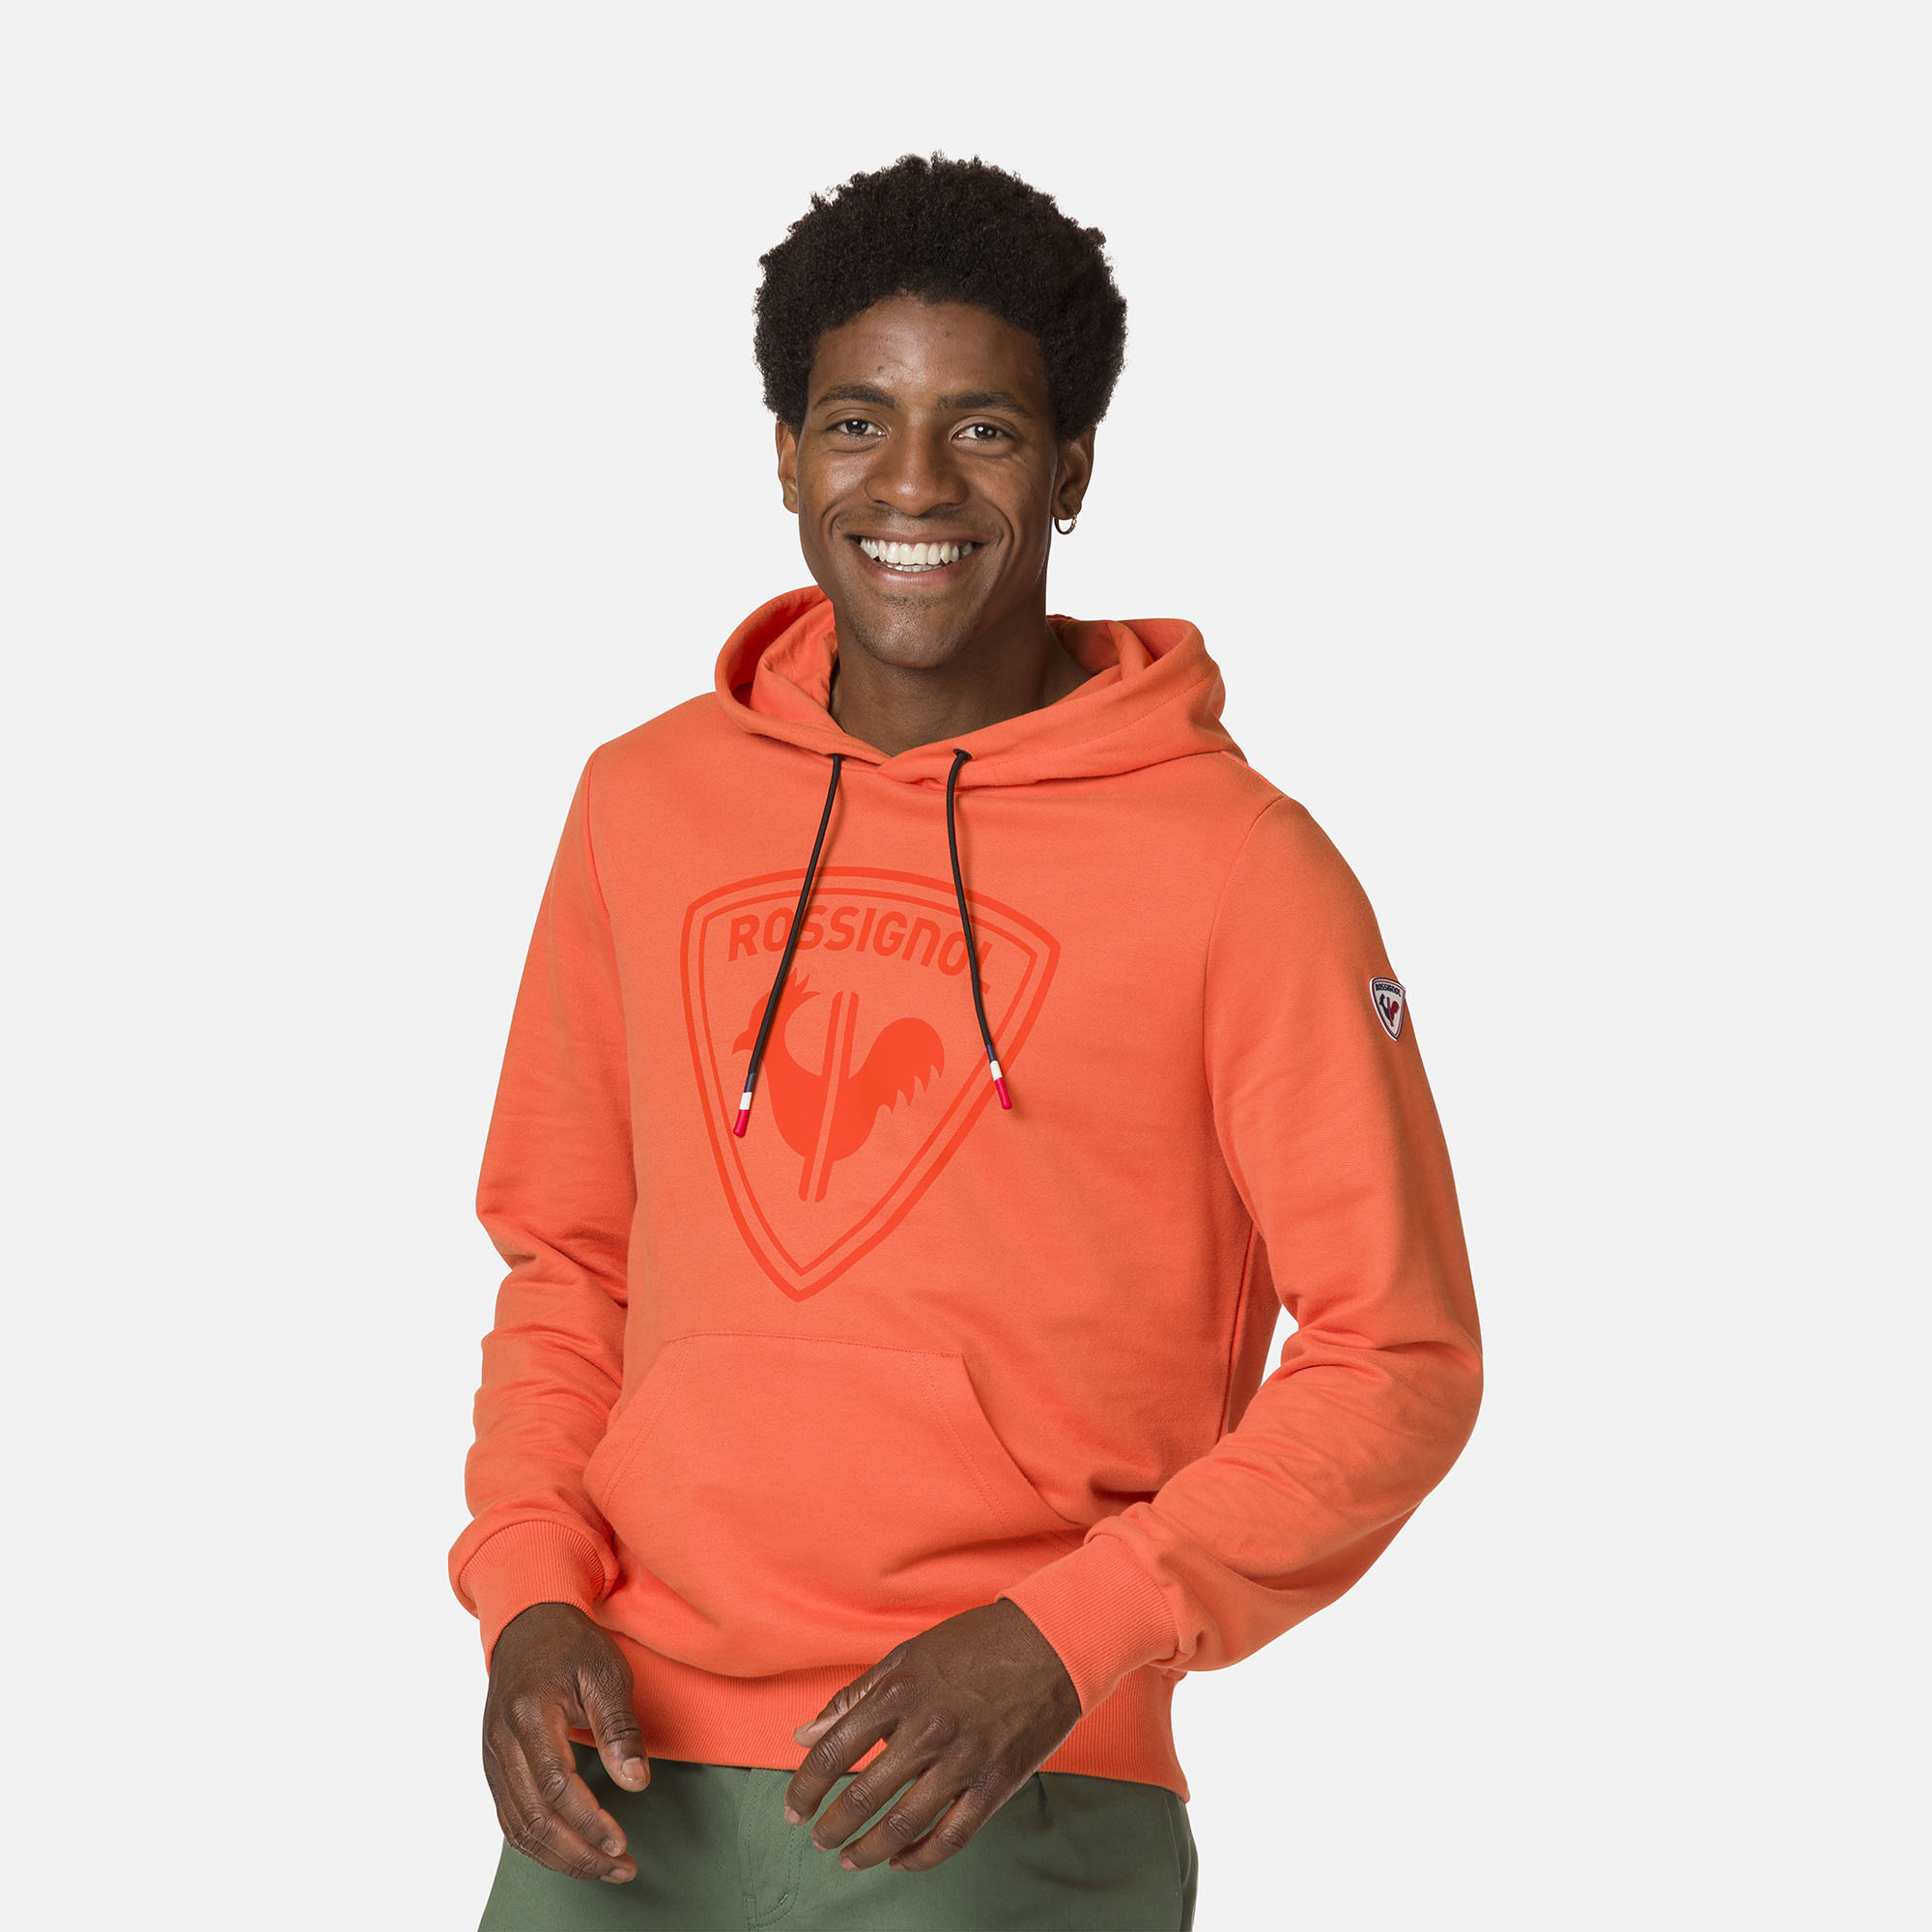 Men's hooded logo cotton sweatshirt